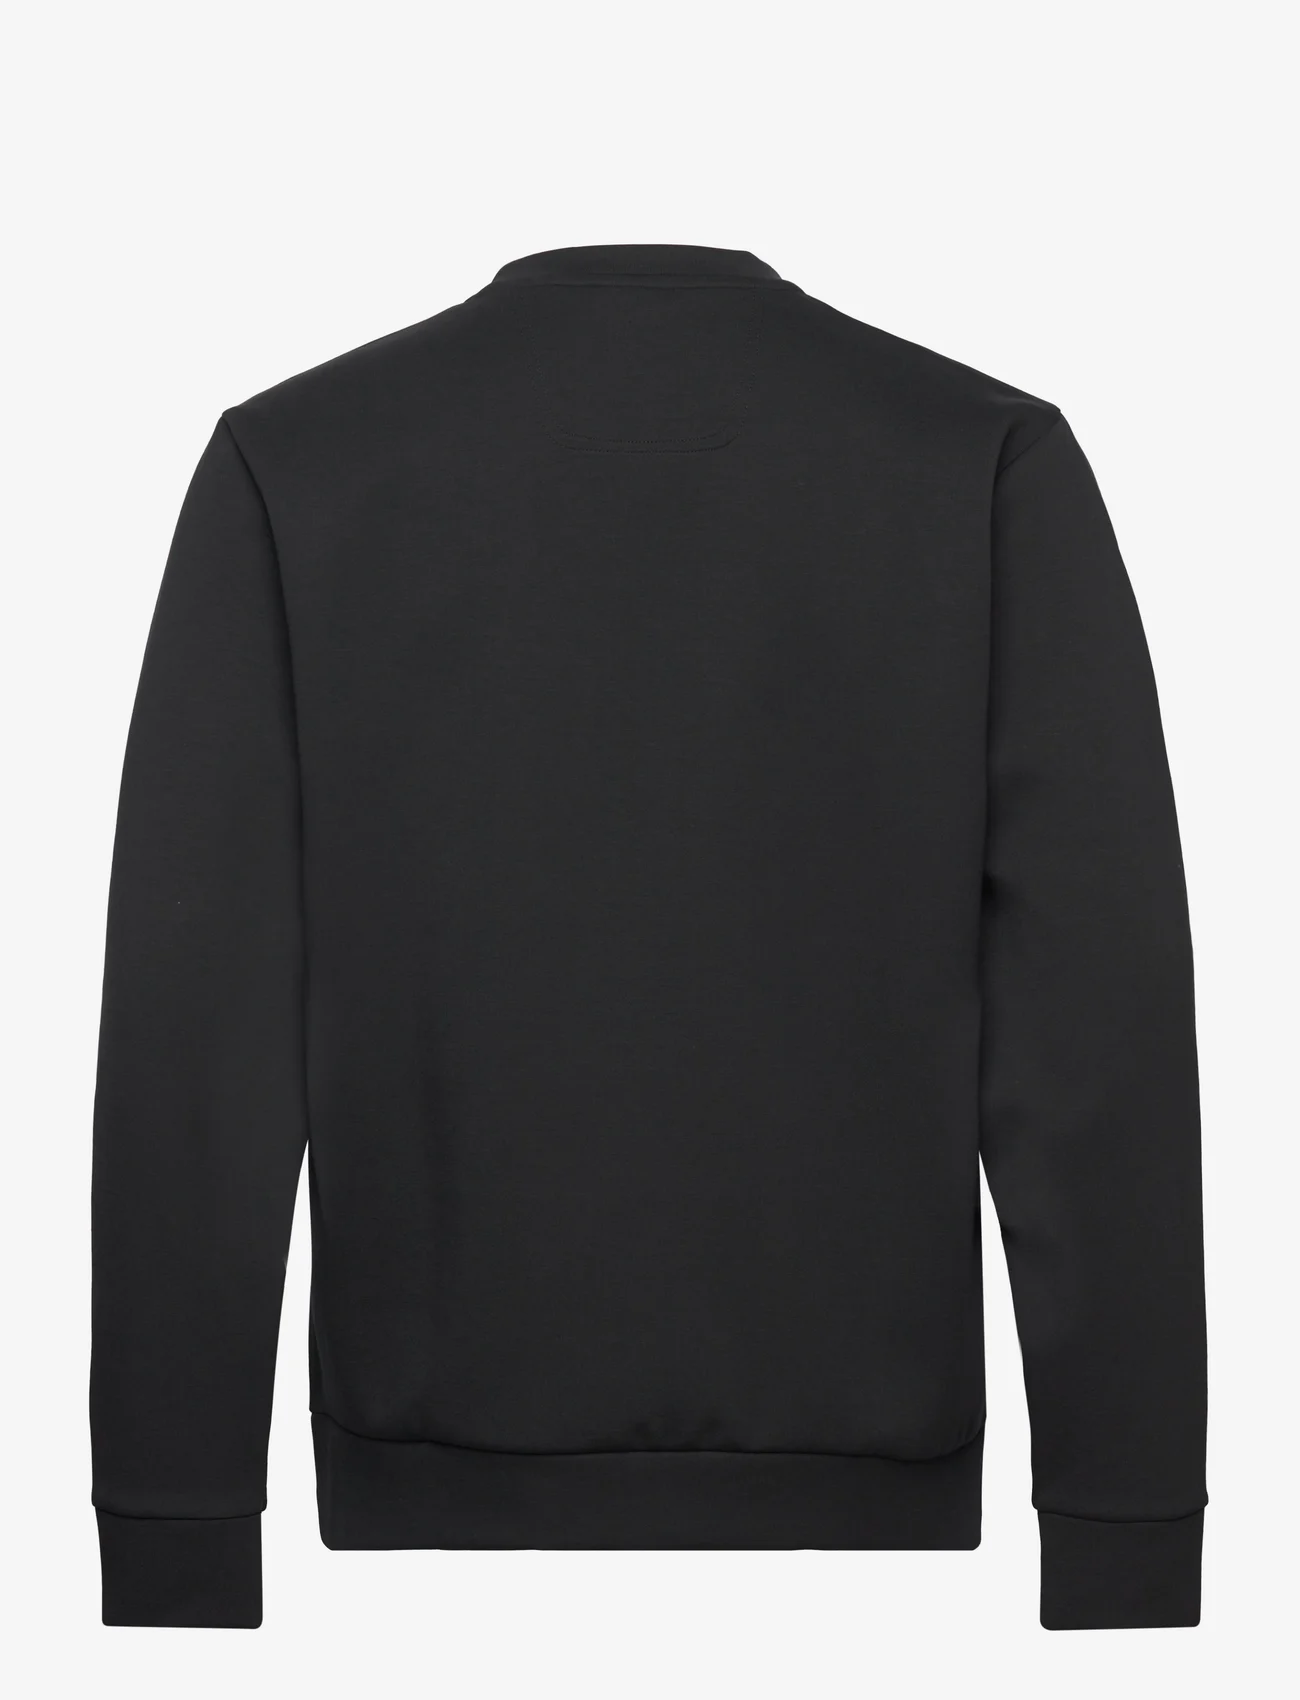 BOSS - Salbo 1 - sweatshirts - black - 1